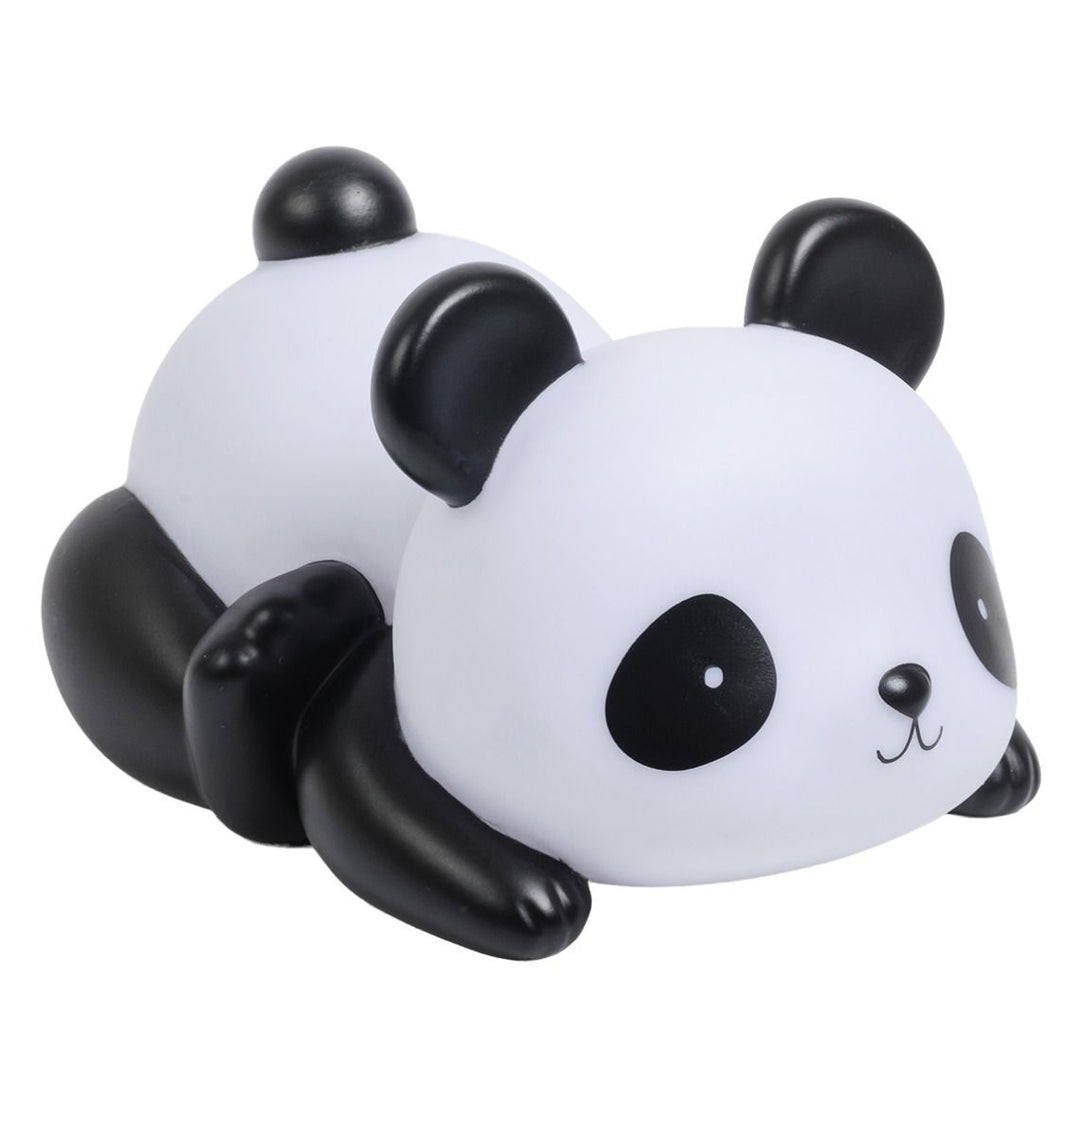 Panda Money Box, Decor, A Little Lovely Company - 3LittlePicks